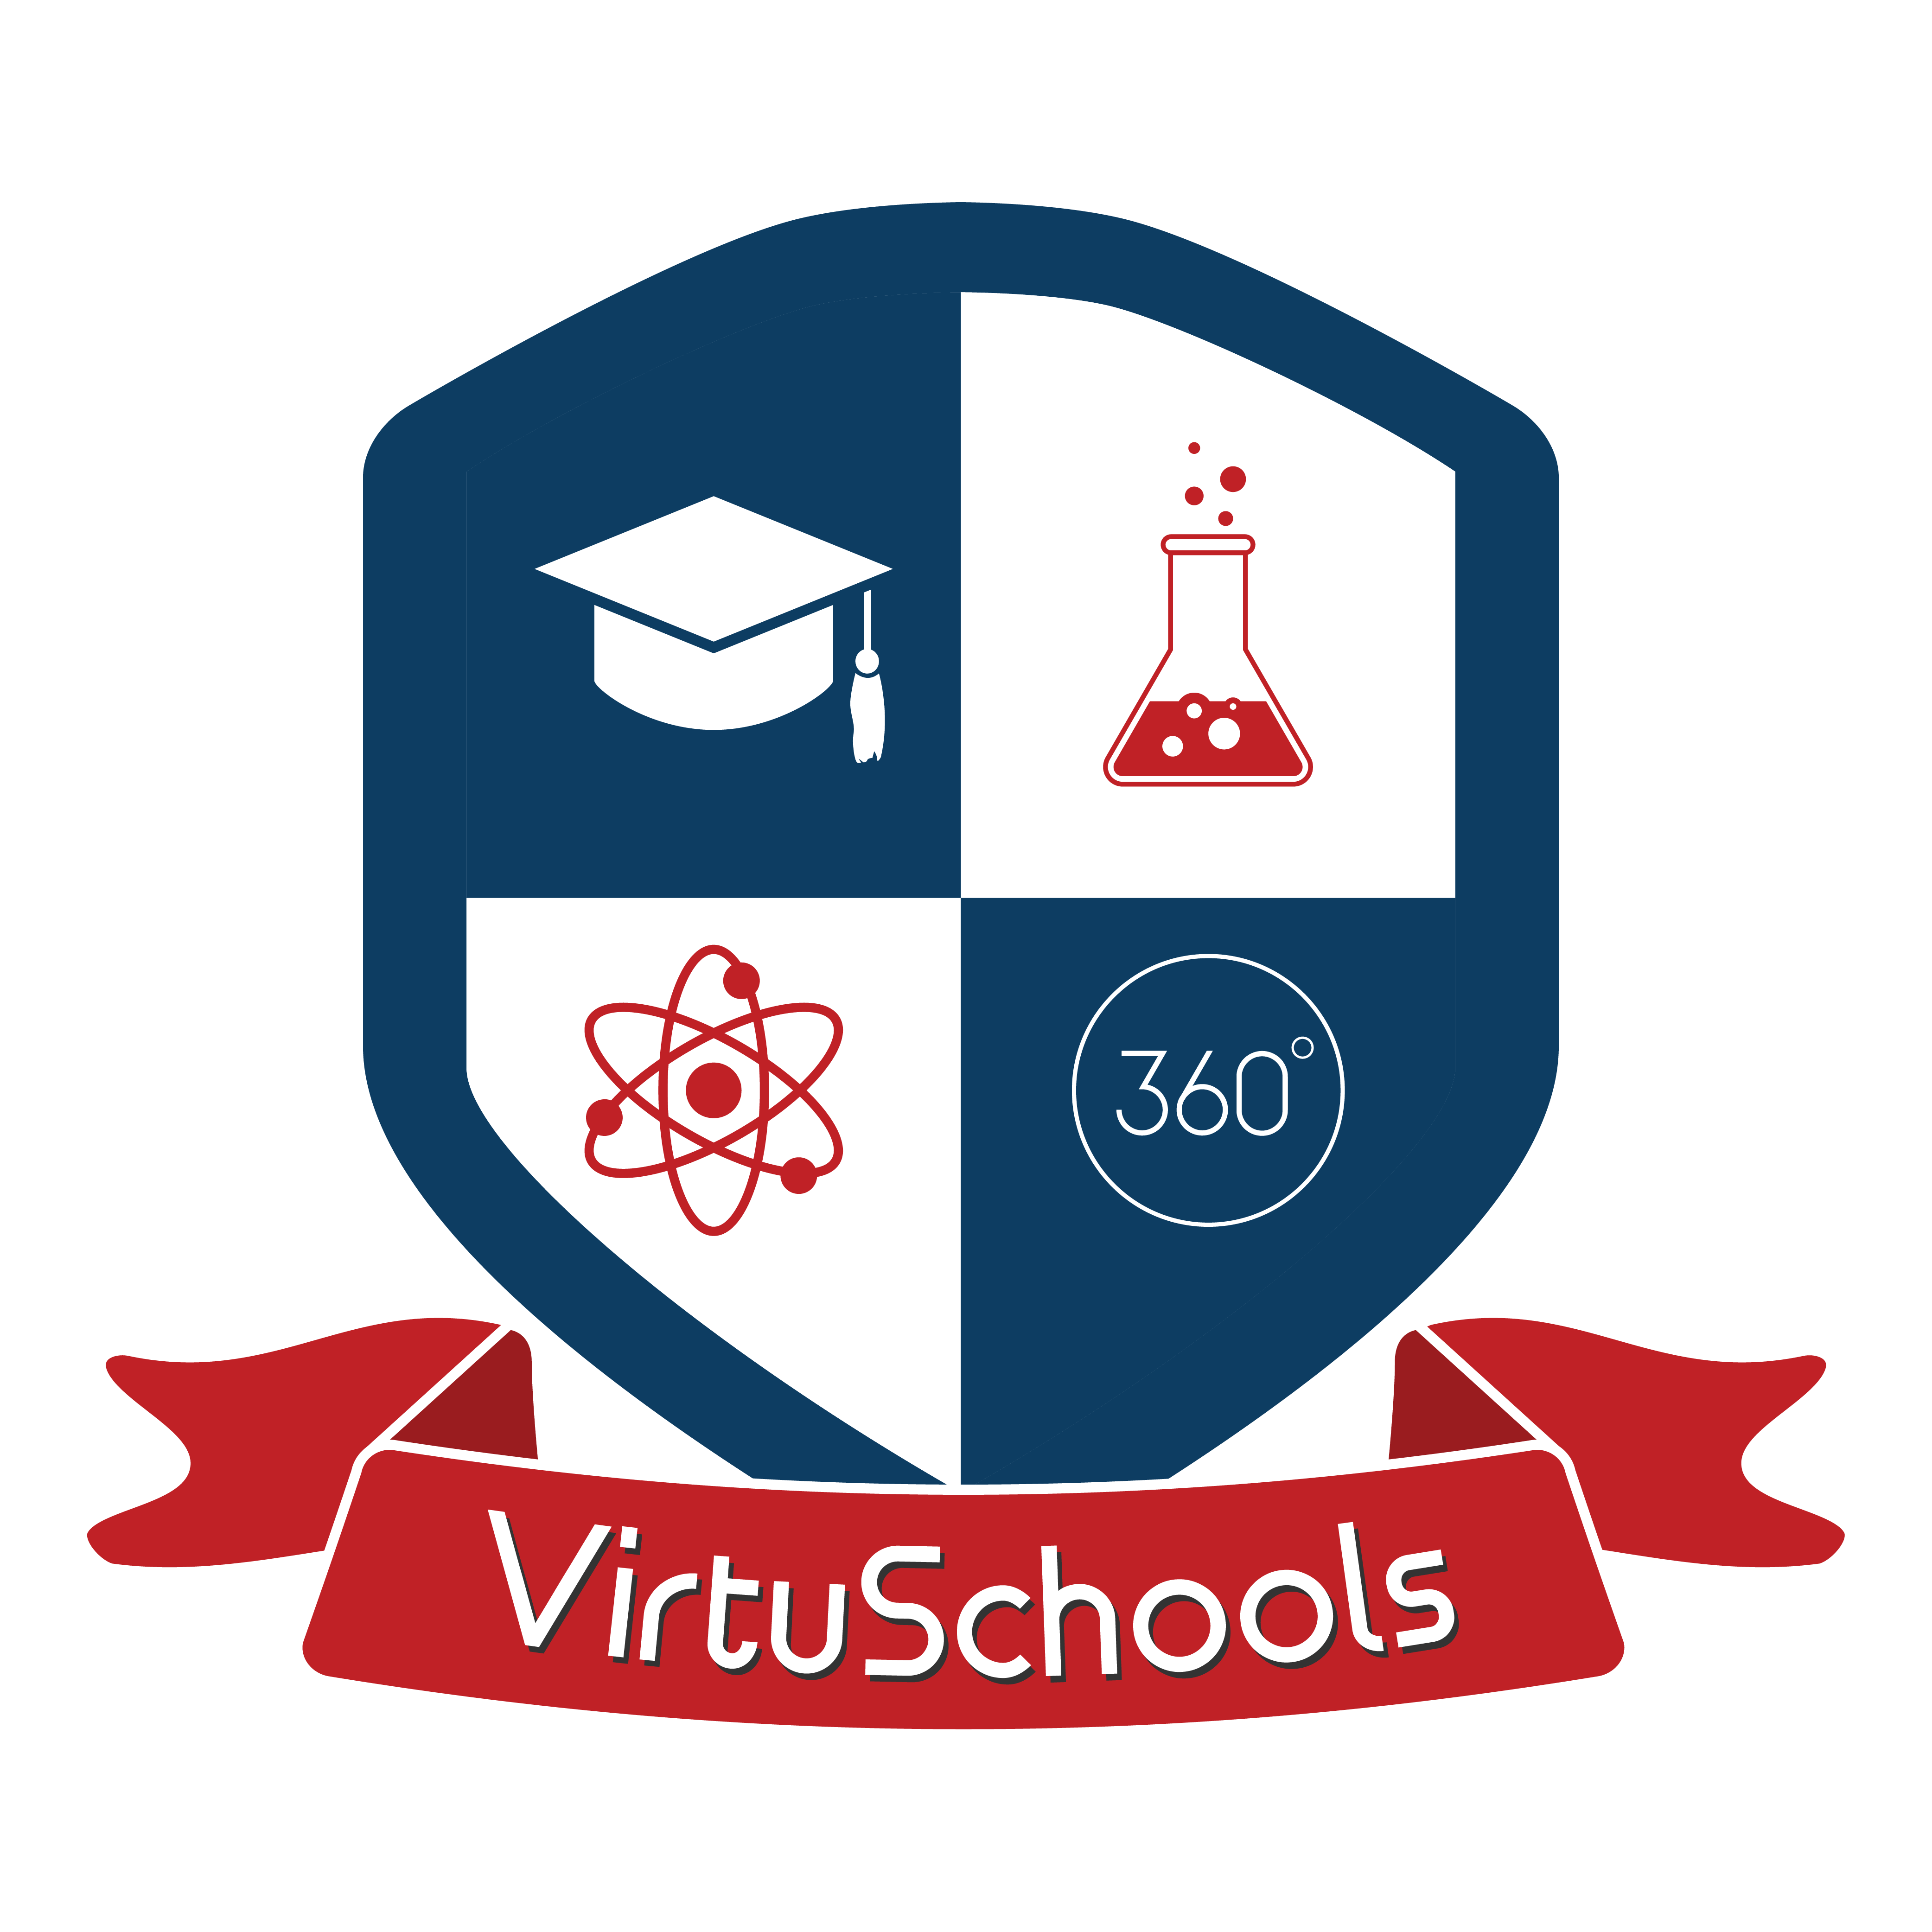 VirtuSchools